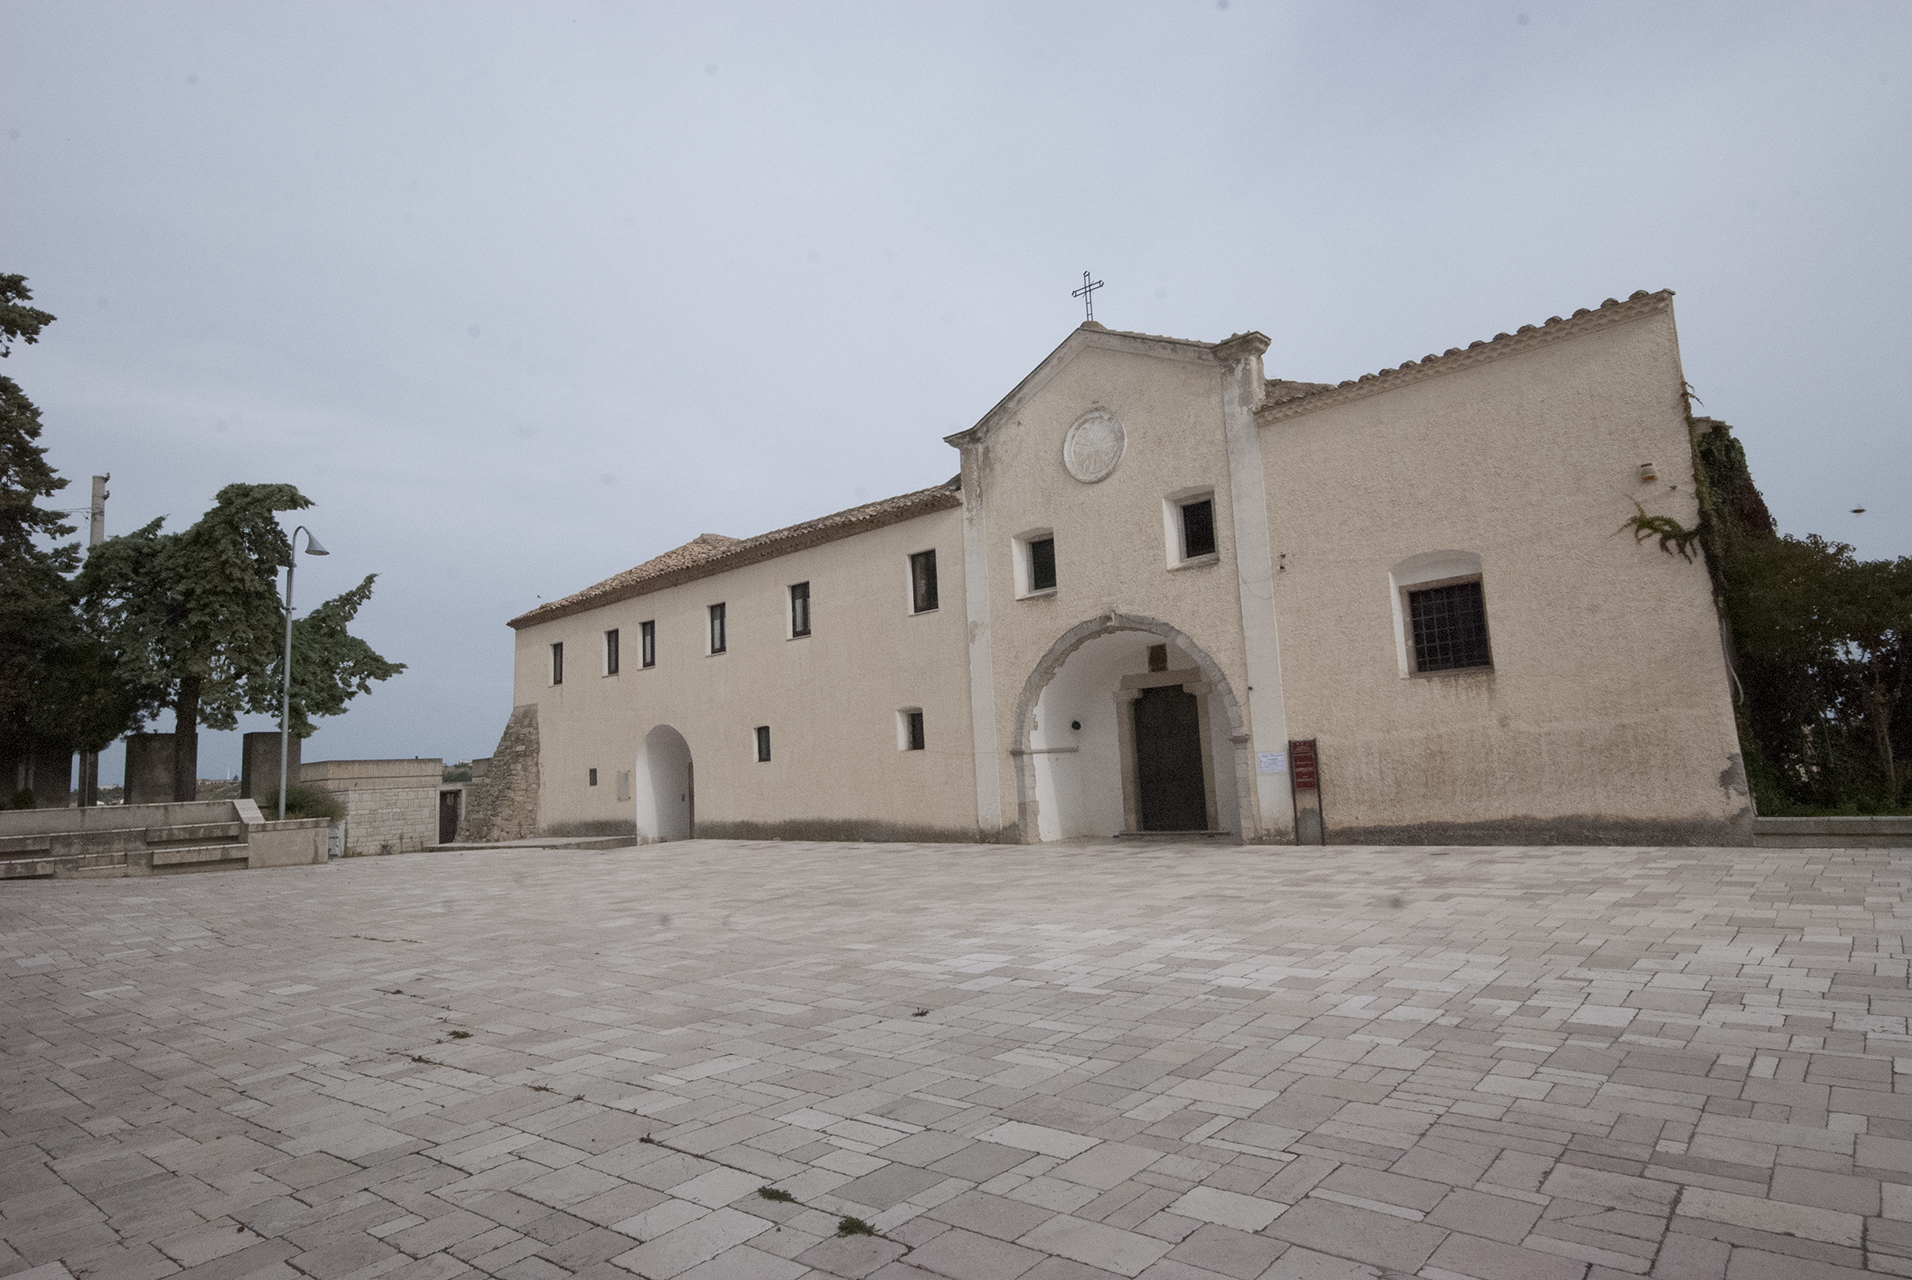 Convento S. Antonio (convento, francescano) - Oppido Lucano (PZ) 